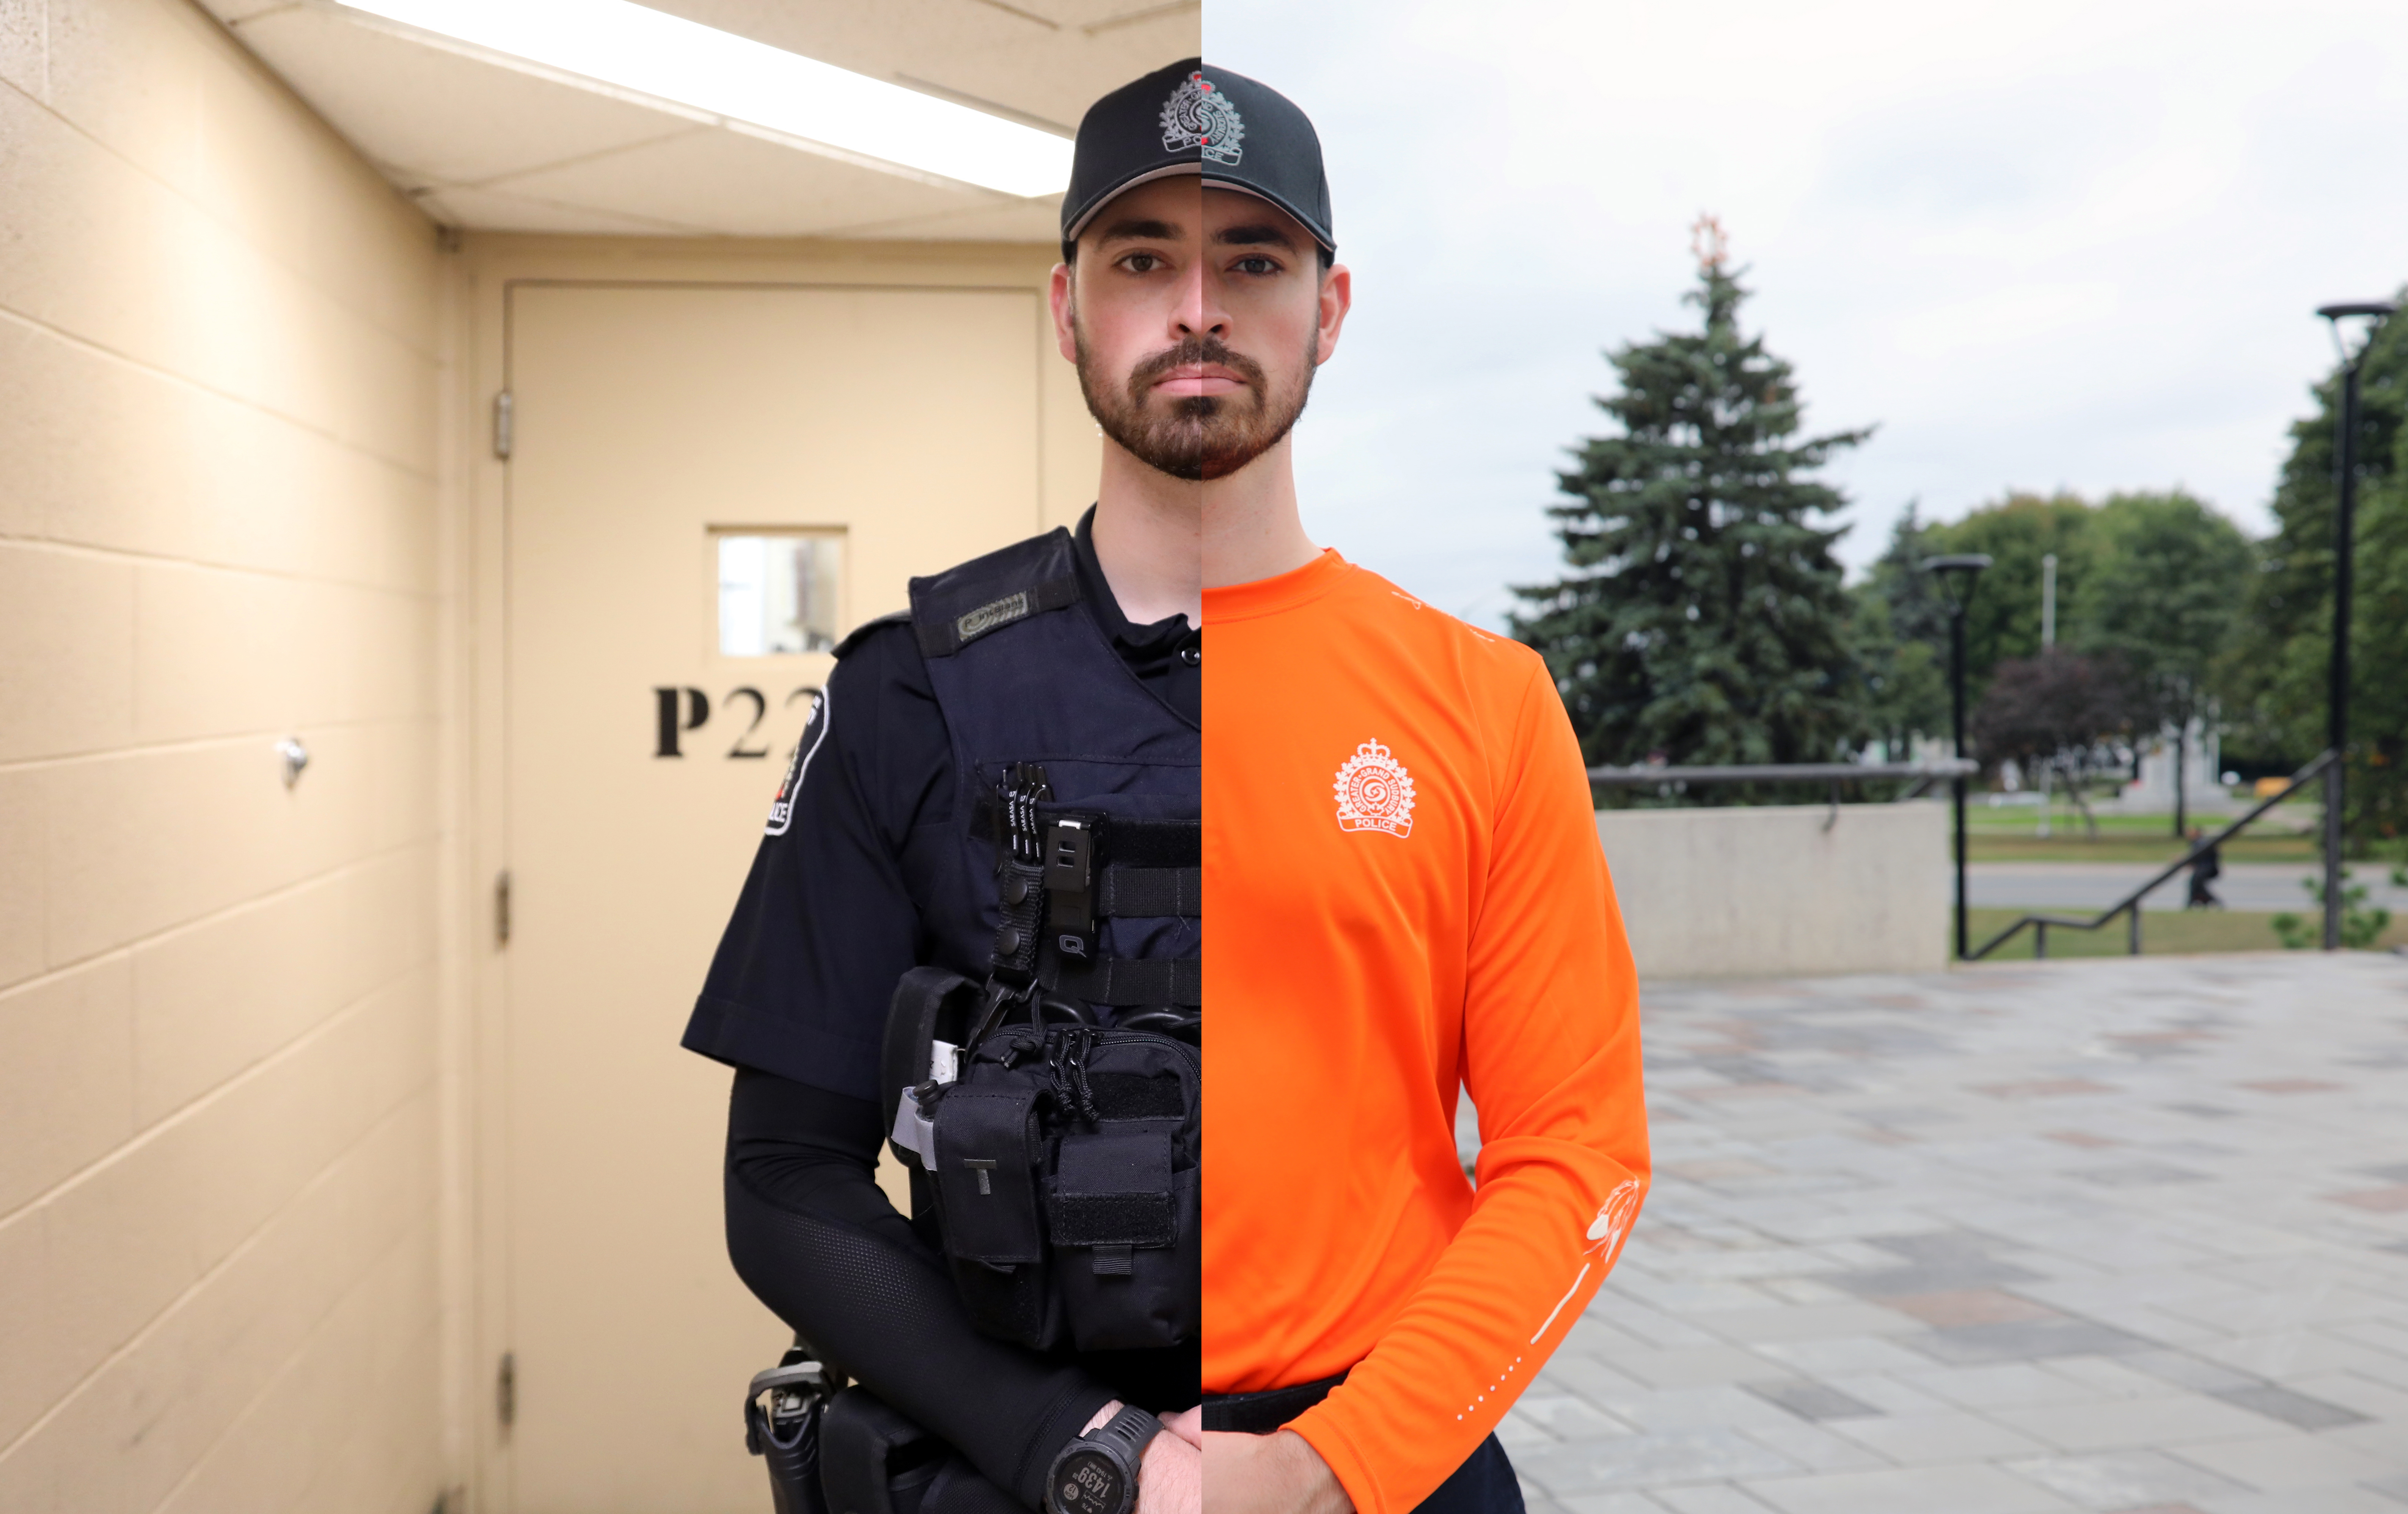 Police officer half in uniform half in orange shirt